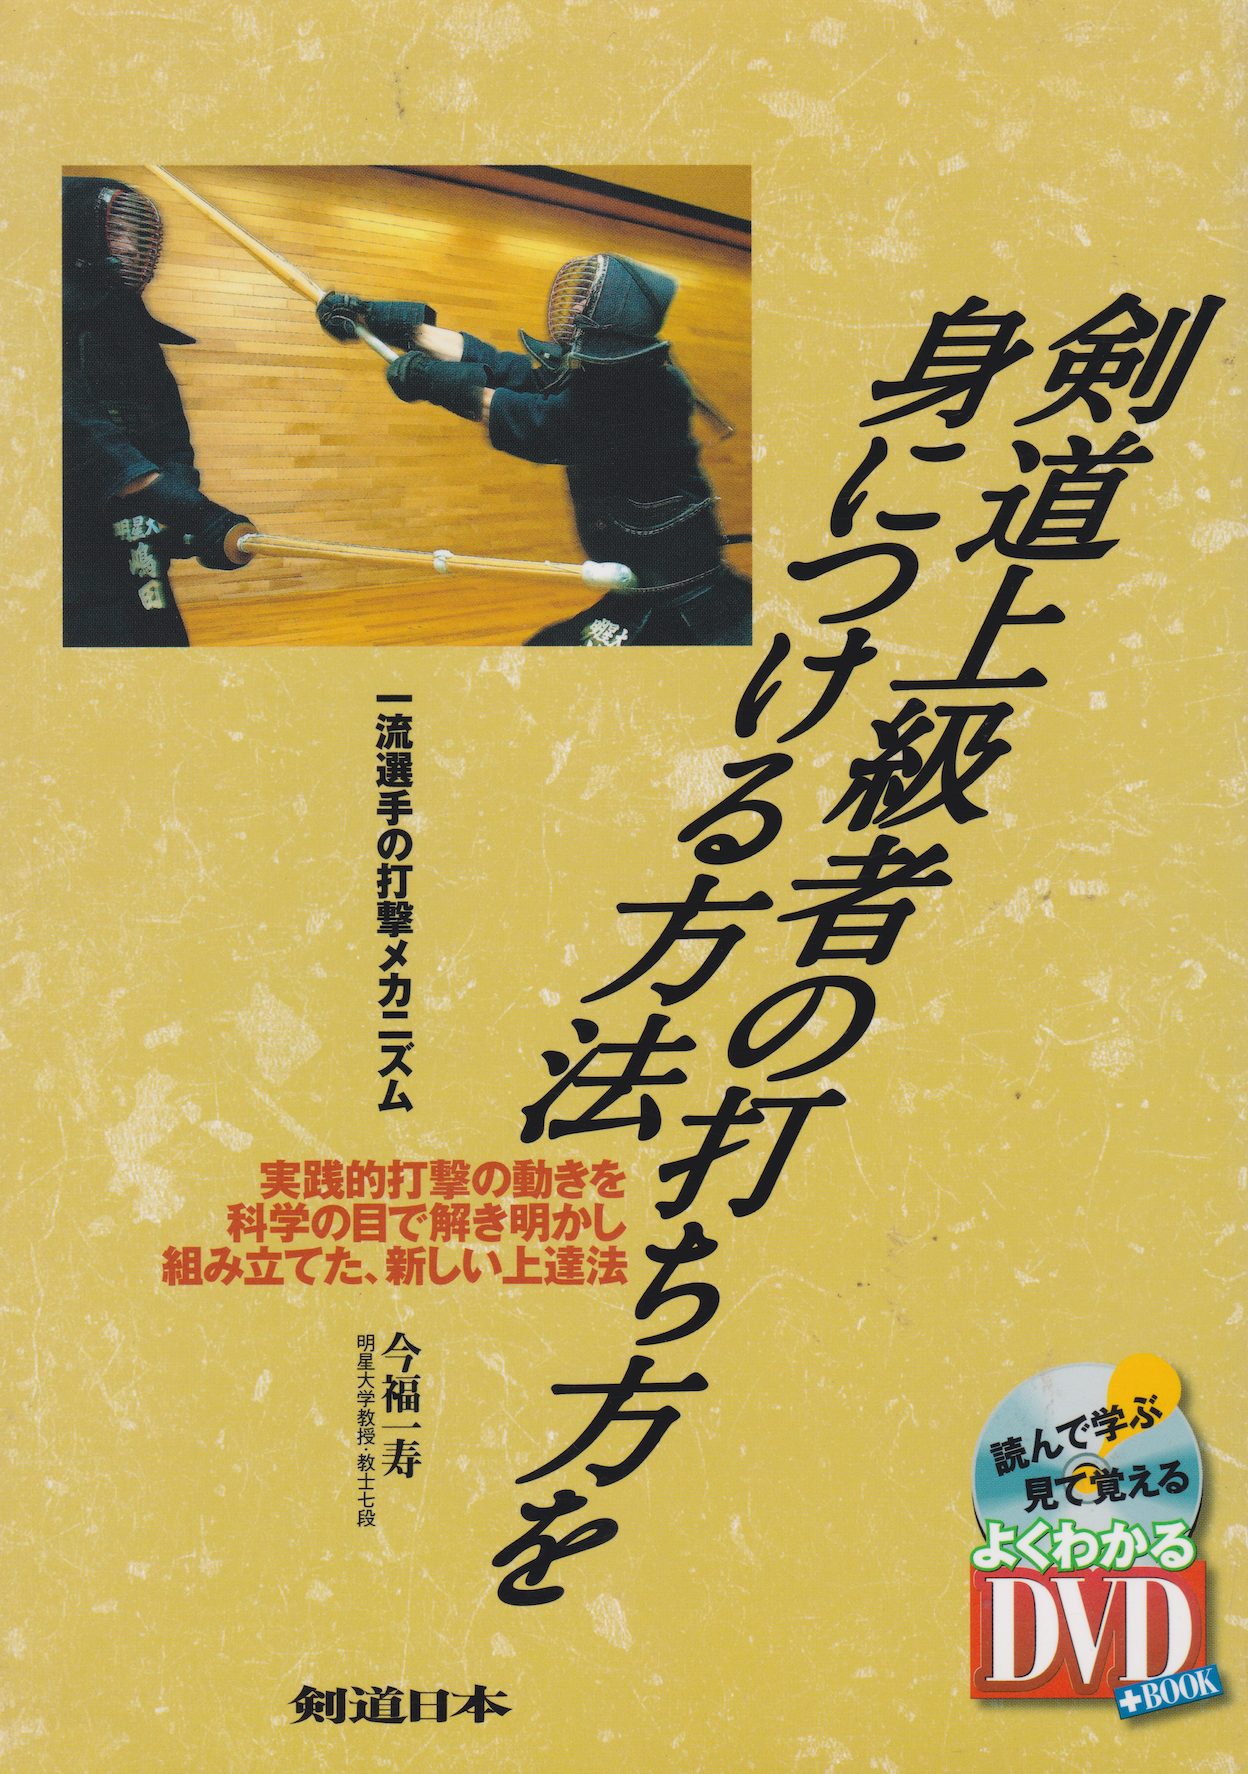 Advanced Kendo Striking Book & DVD by Kazutoshi Imafuku (Preowned) - Budovideos Inc